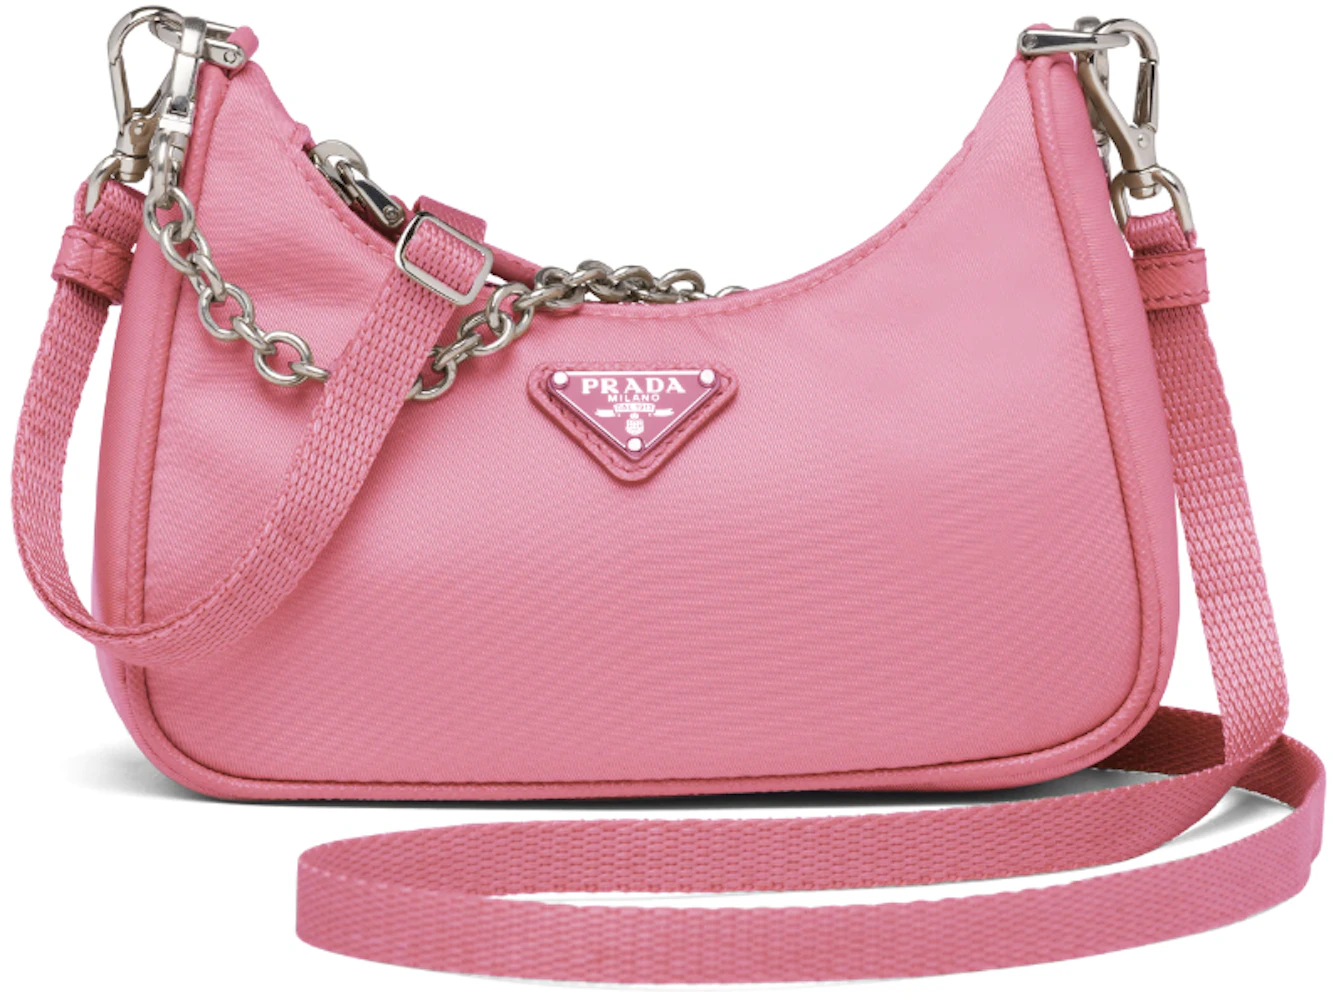 Buy Prada Accessories - Color Pink - StockX